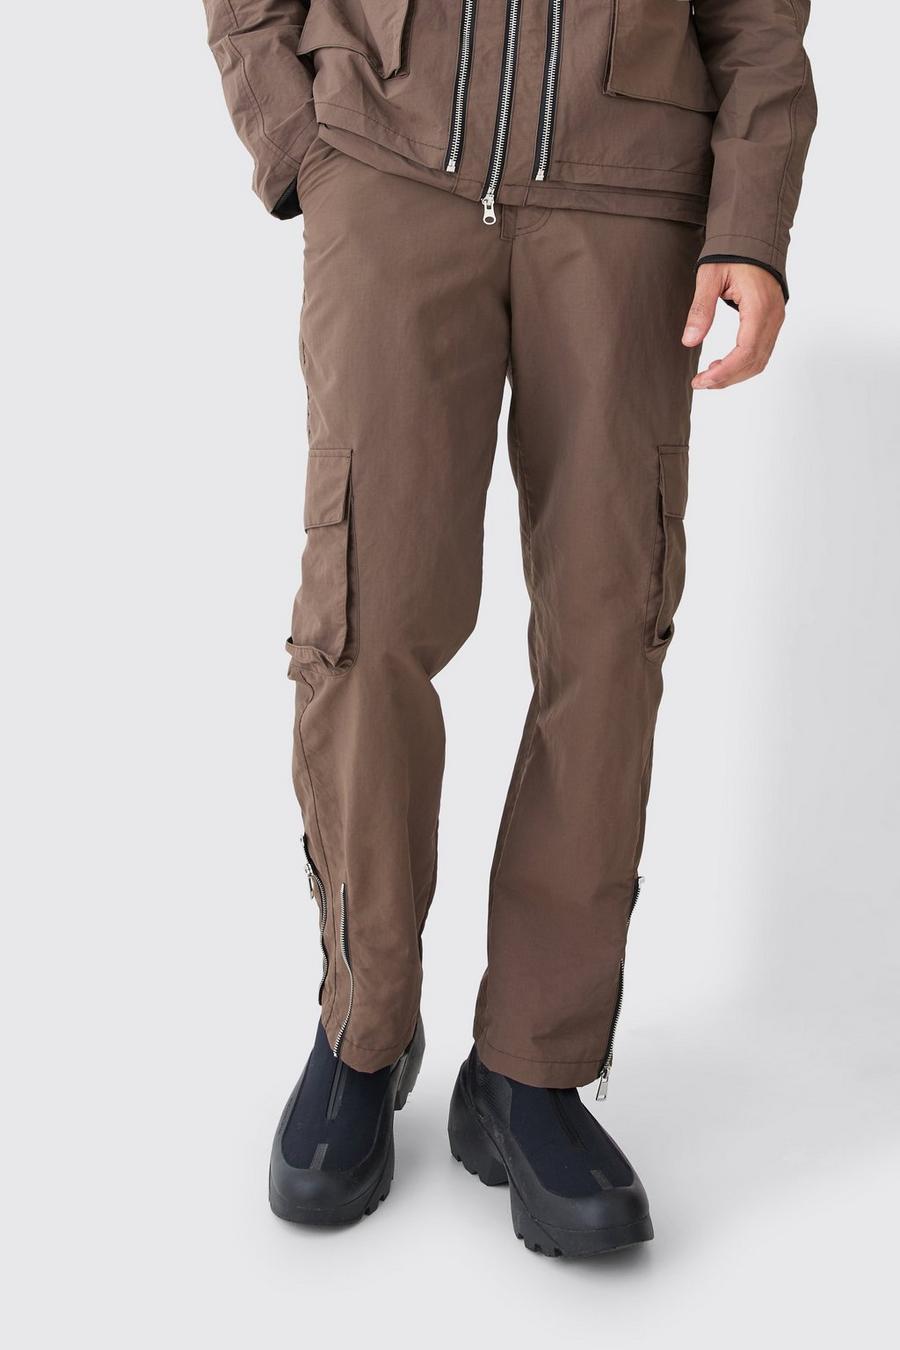 Pantaloni Cargo in nylon slavato con vita fissa, Khaki